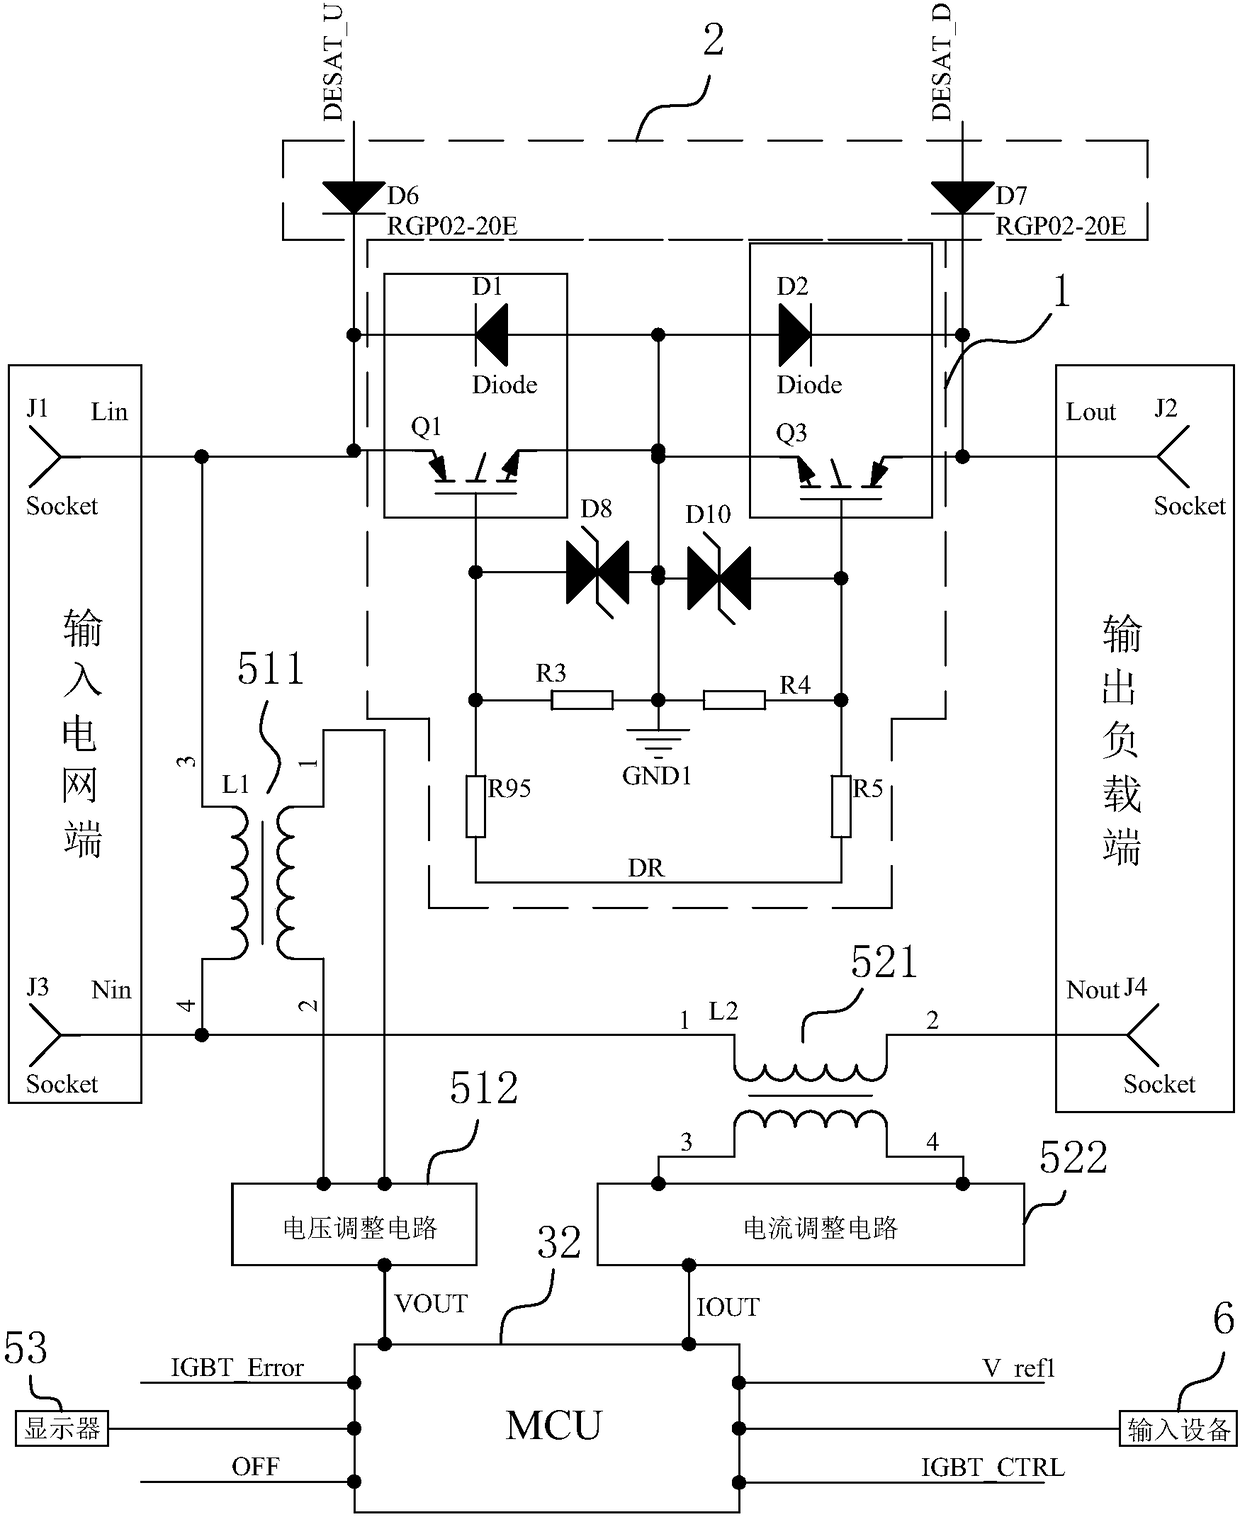 Circuit breaker and short-circuit protection method